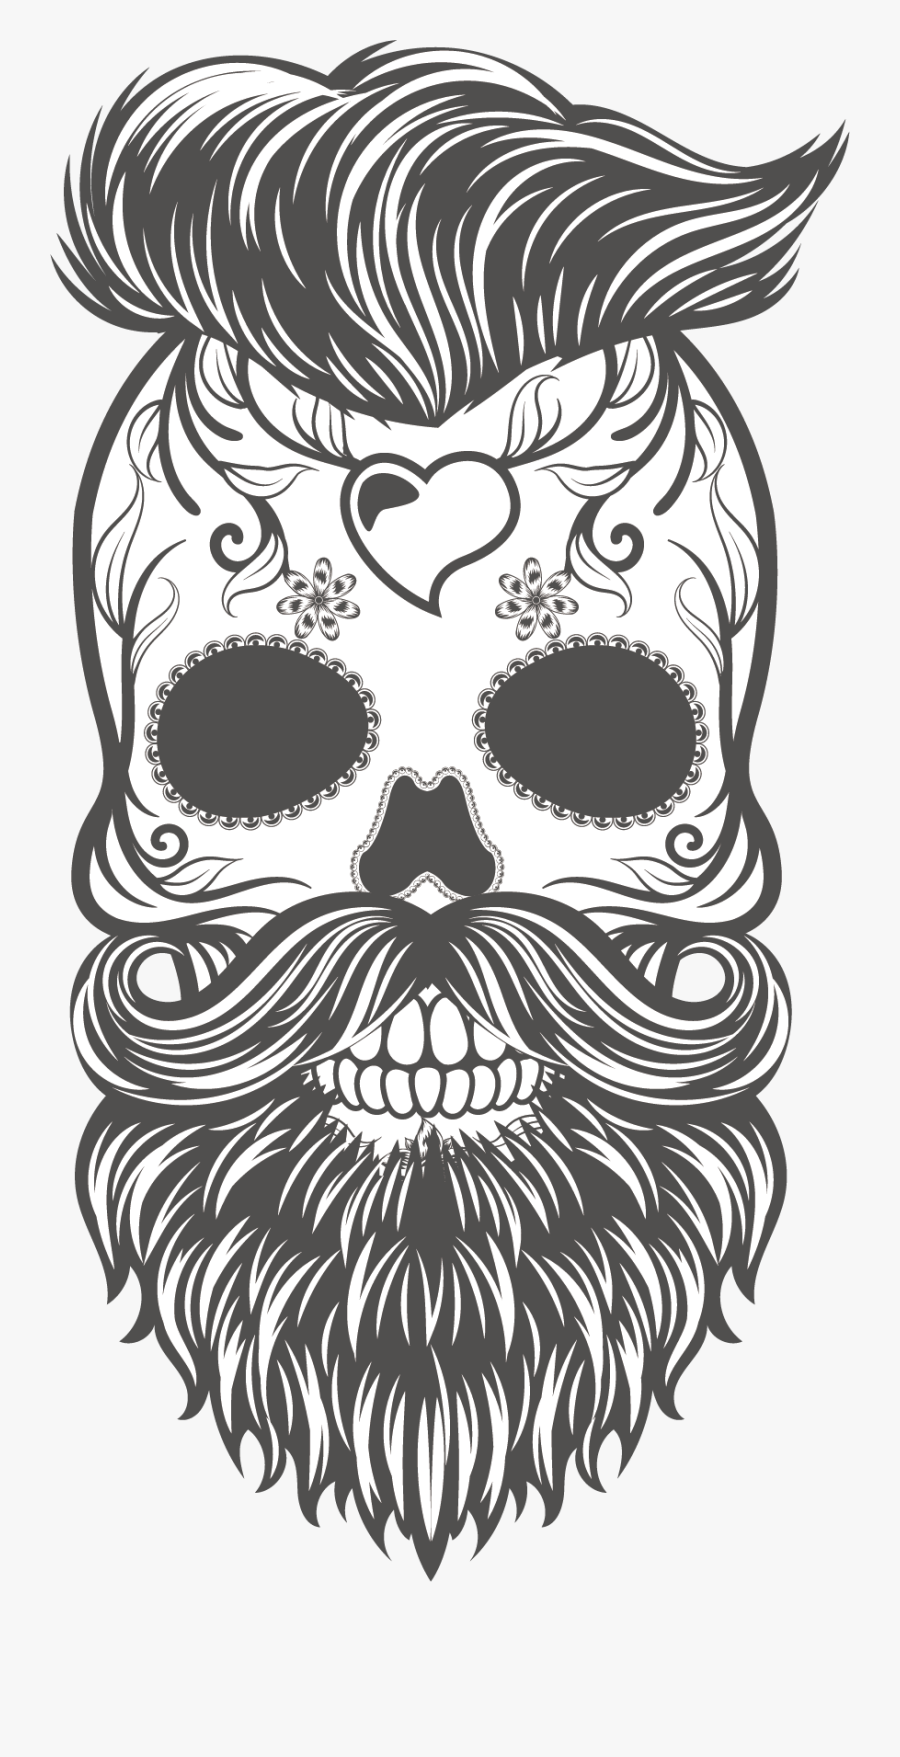 Transparent Sugar Skull Clipart Black And White - Sugar Skull With Beard, Transparent Clipart